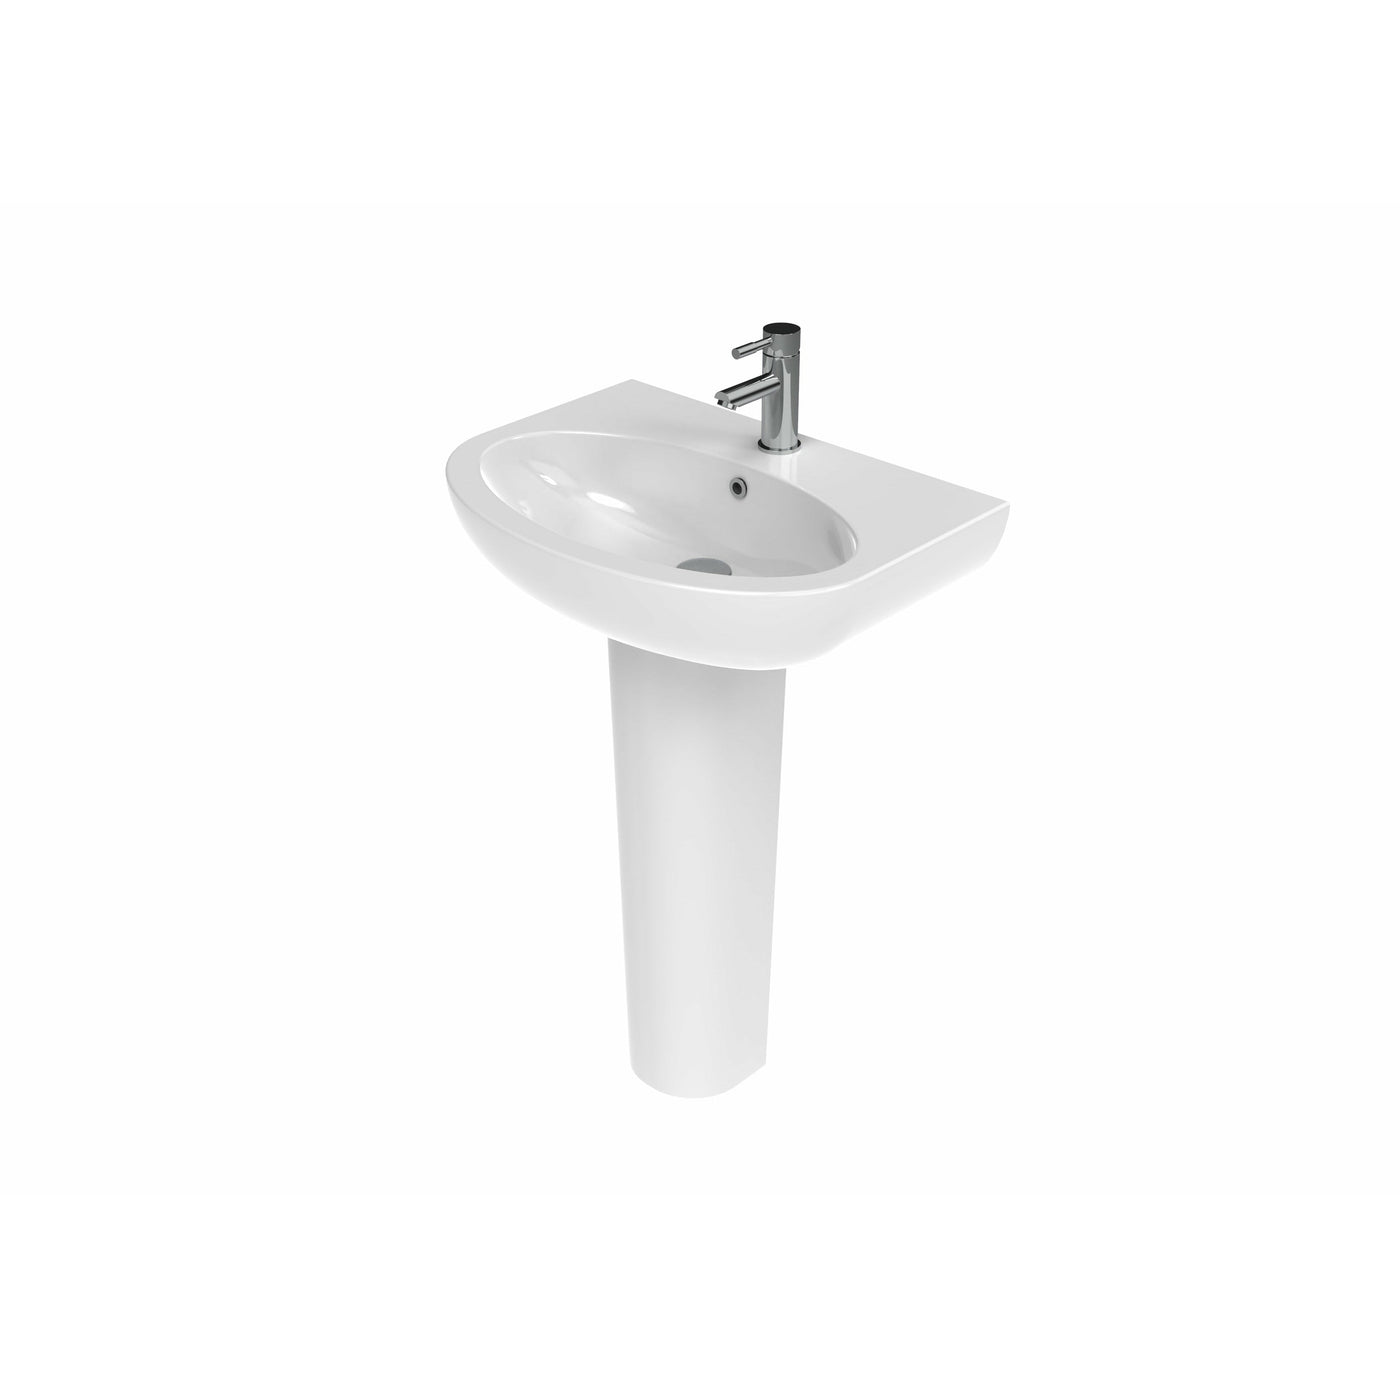 AIR 60x48cm washbasin 1TH with full pedestal - Letta London - 